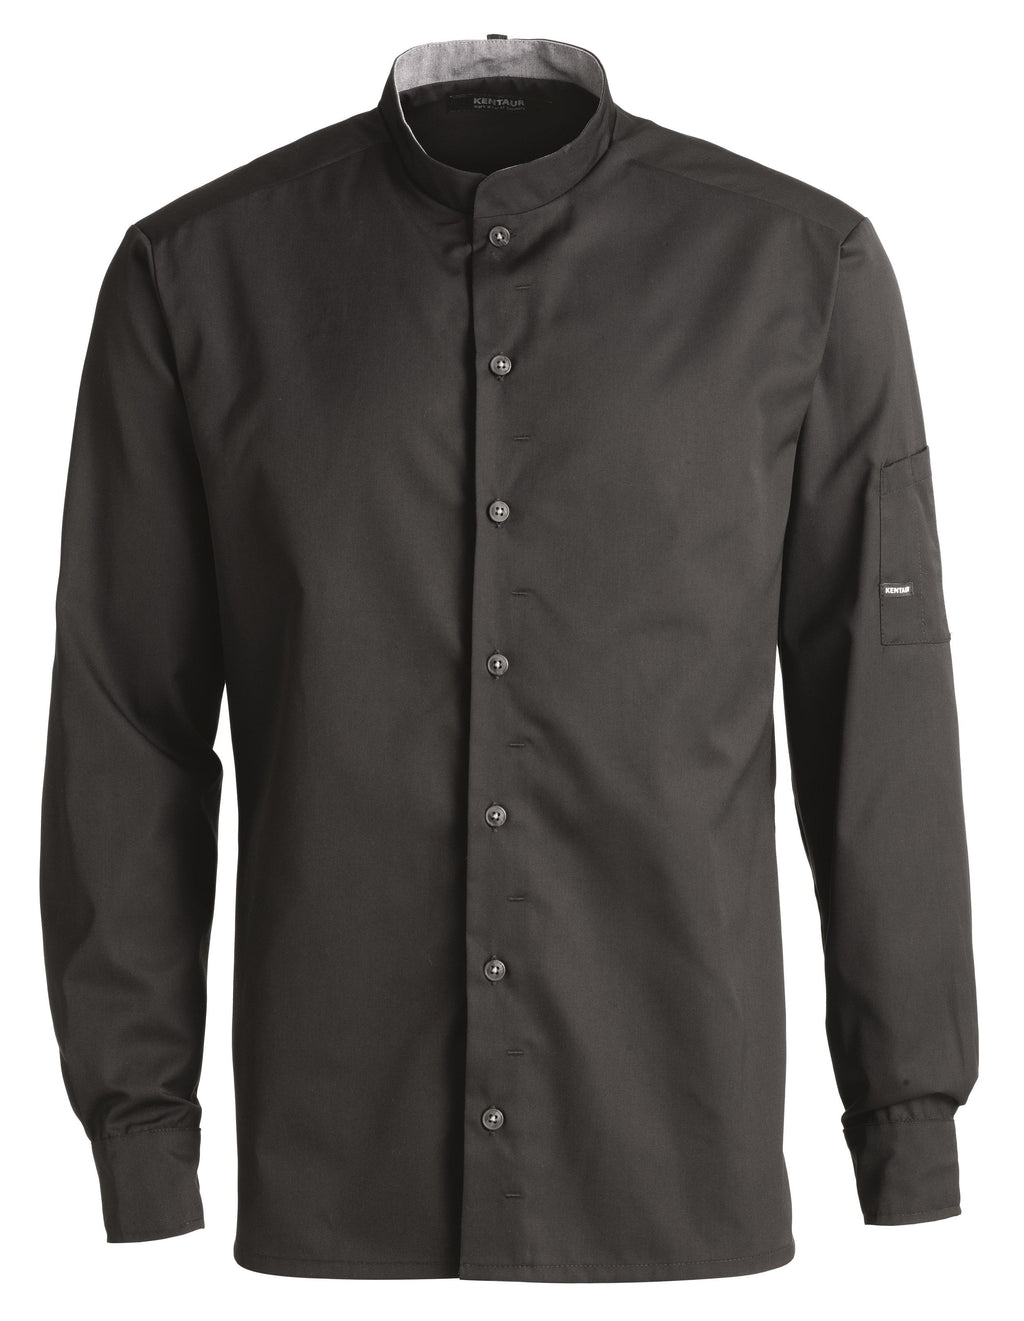 Kentaur 25203 Chef/Service Long Sleeve Shirt Front View Black 